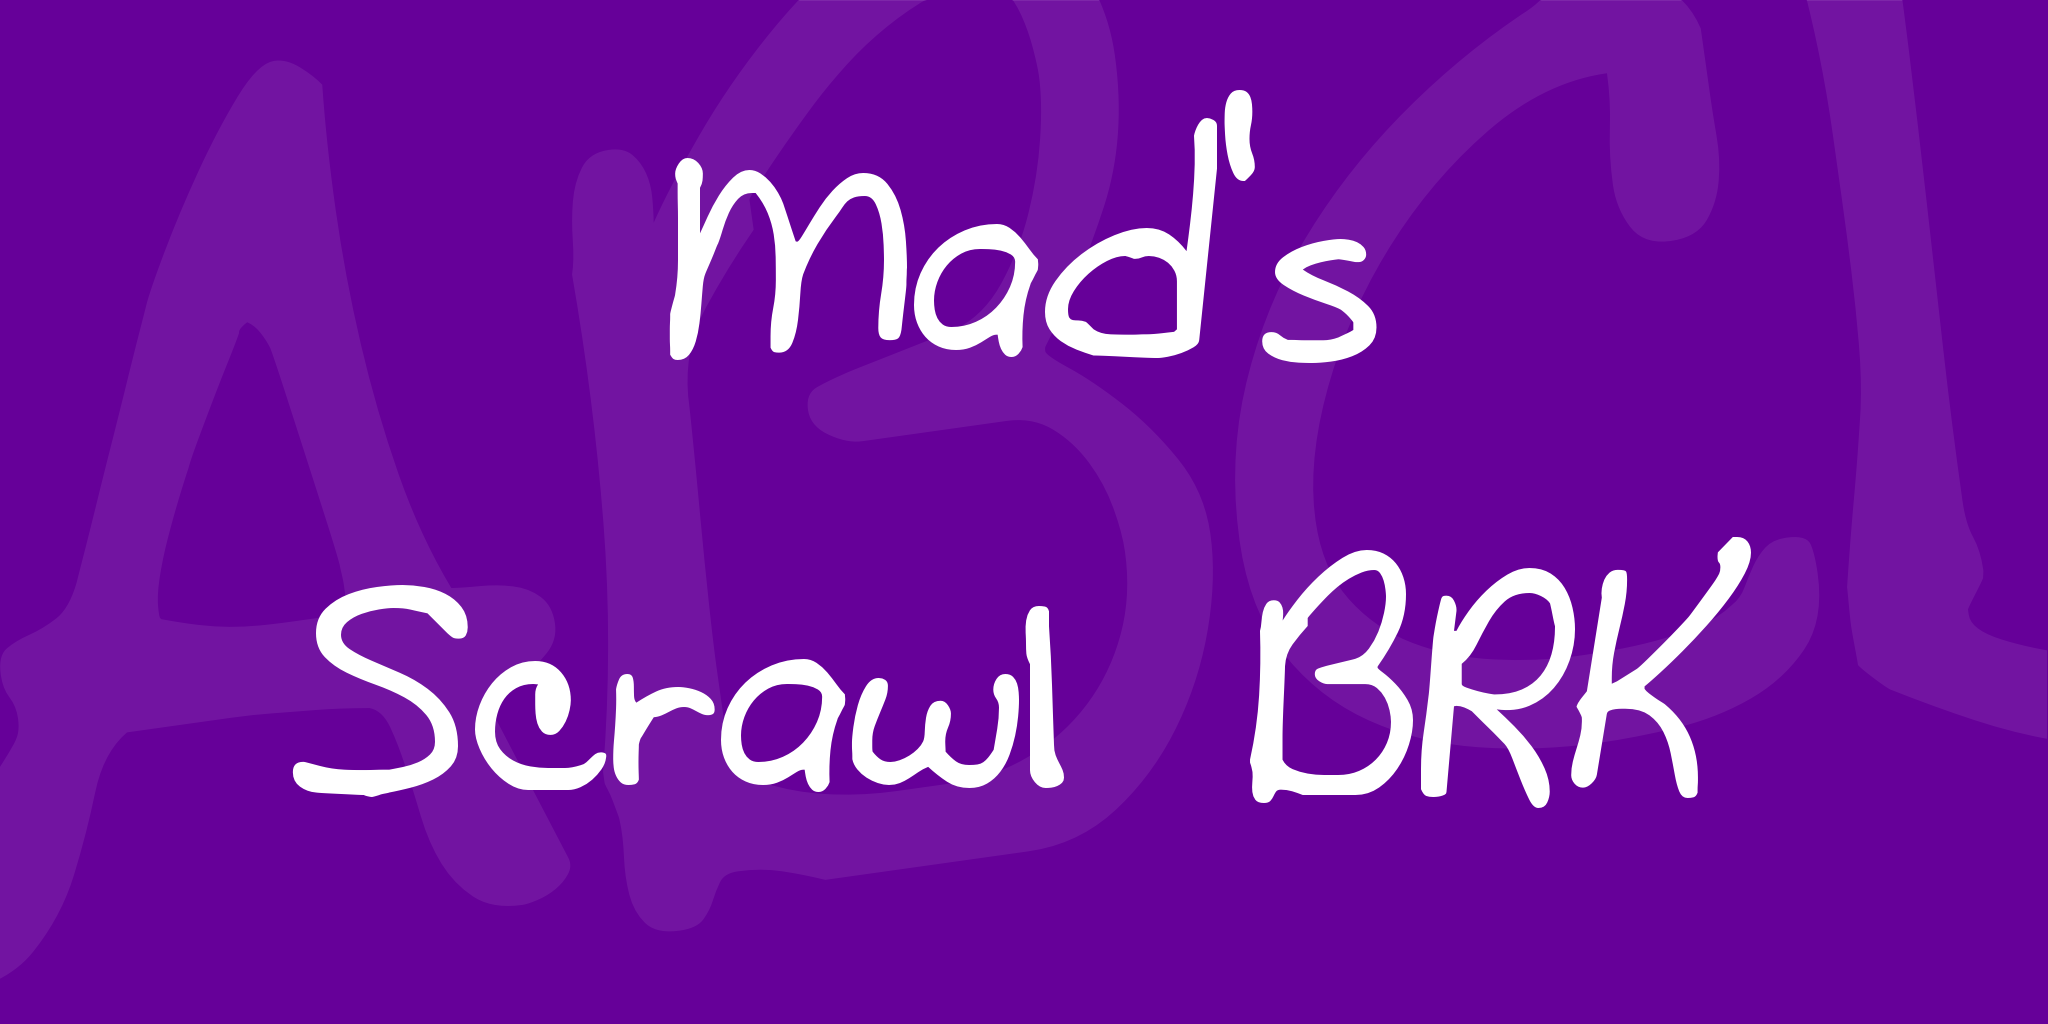 Mads Scrawl Brk